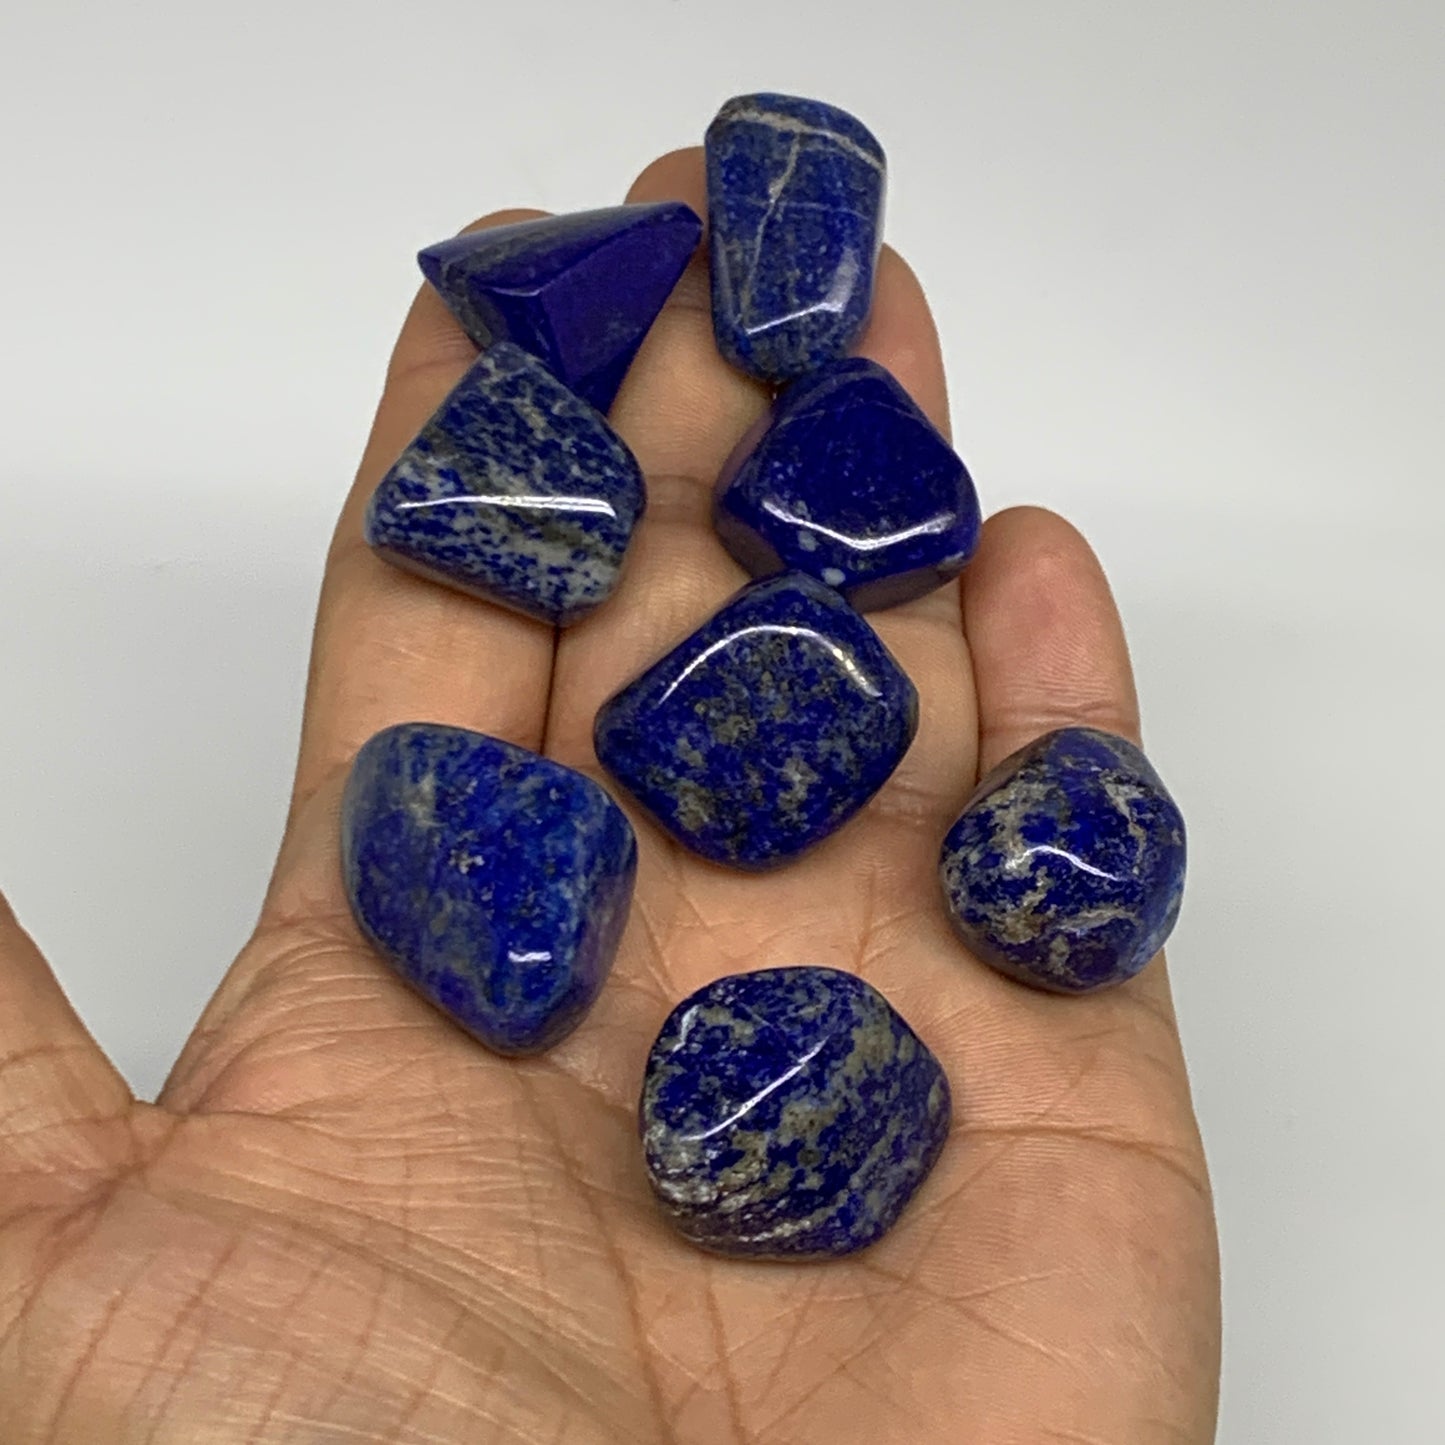 101.5g,0.8"-1", 8pcs, Natural Lapis Lazuli Tumbled Stone @Afghanistan, B30238